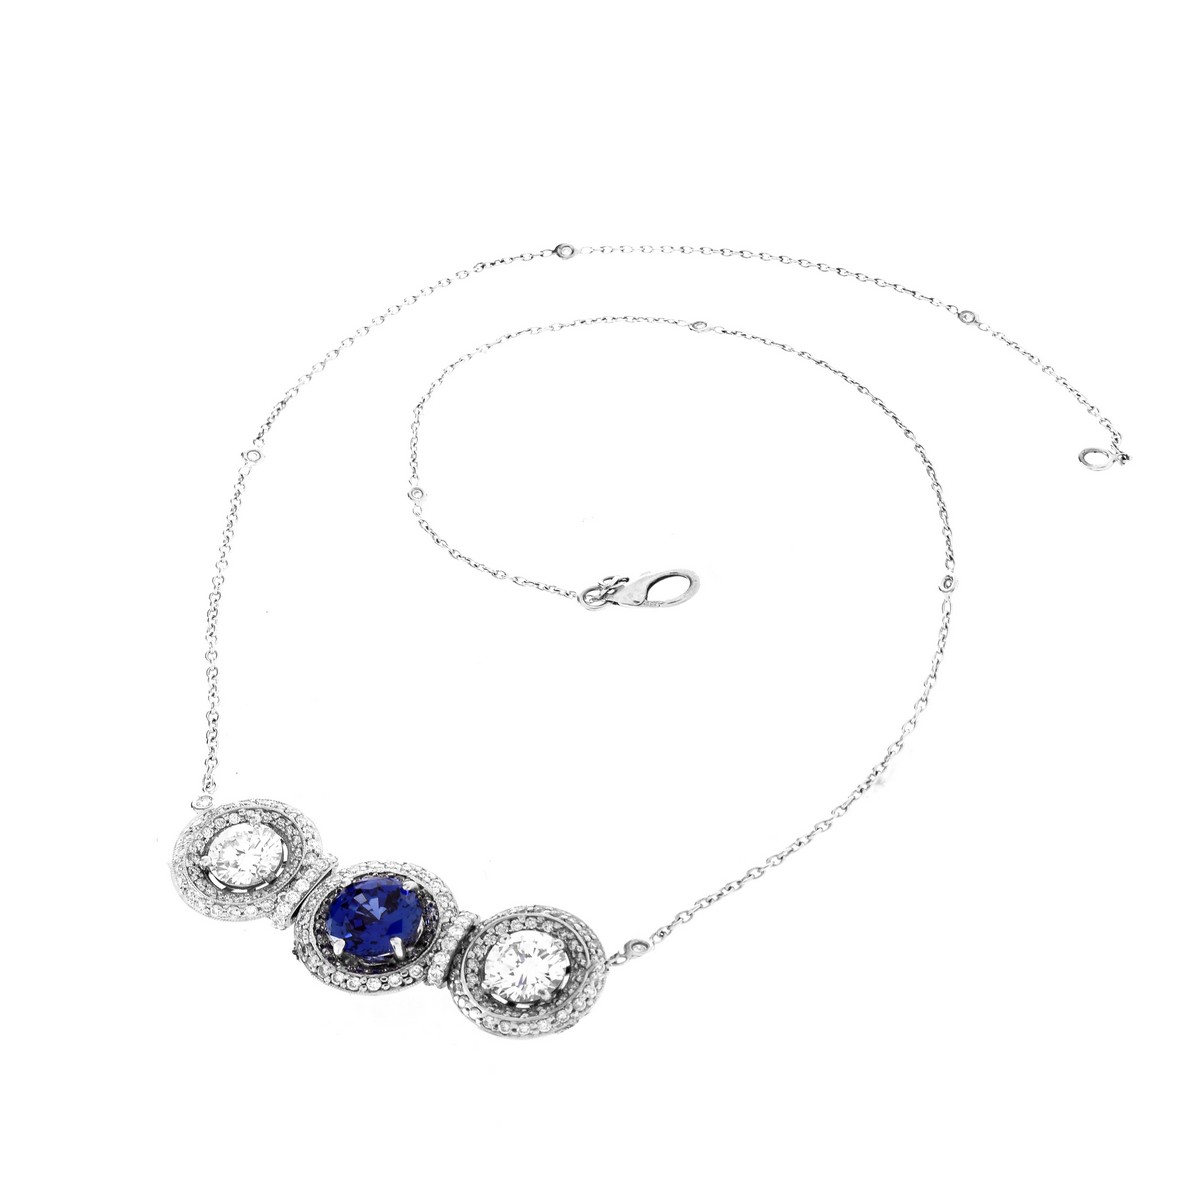 Contemporary Diamond and Sapphire Necklace